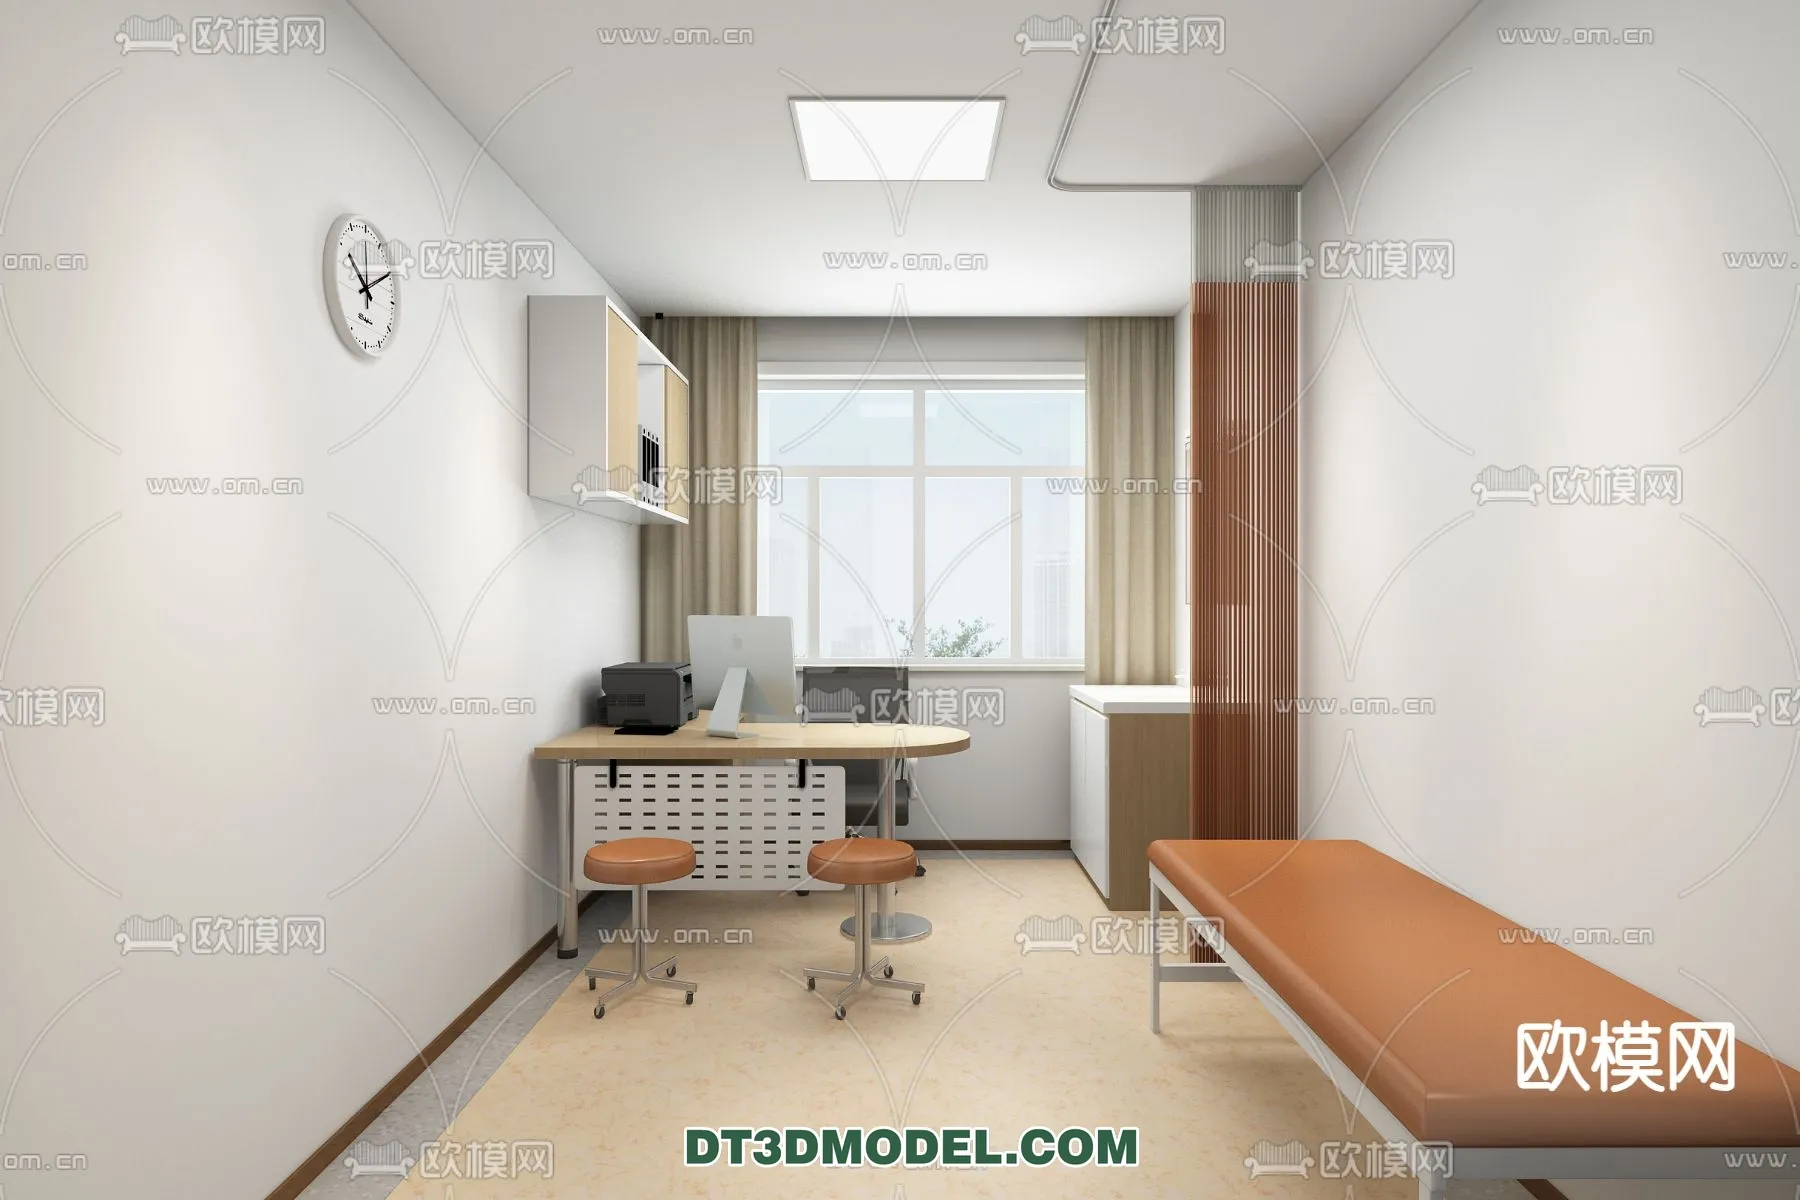 HOSPITAL 3D SCENES – MODERN – 0196